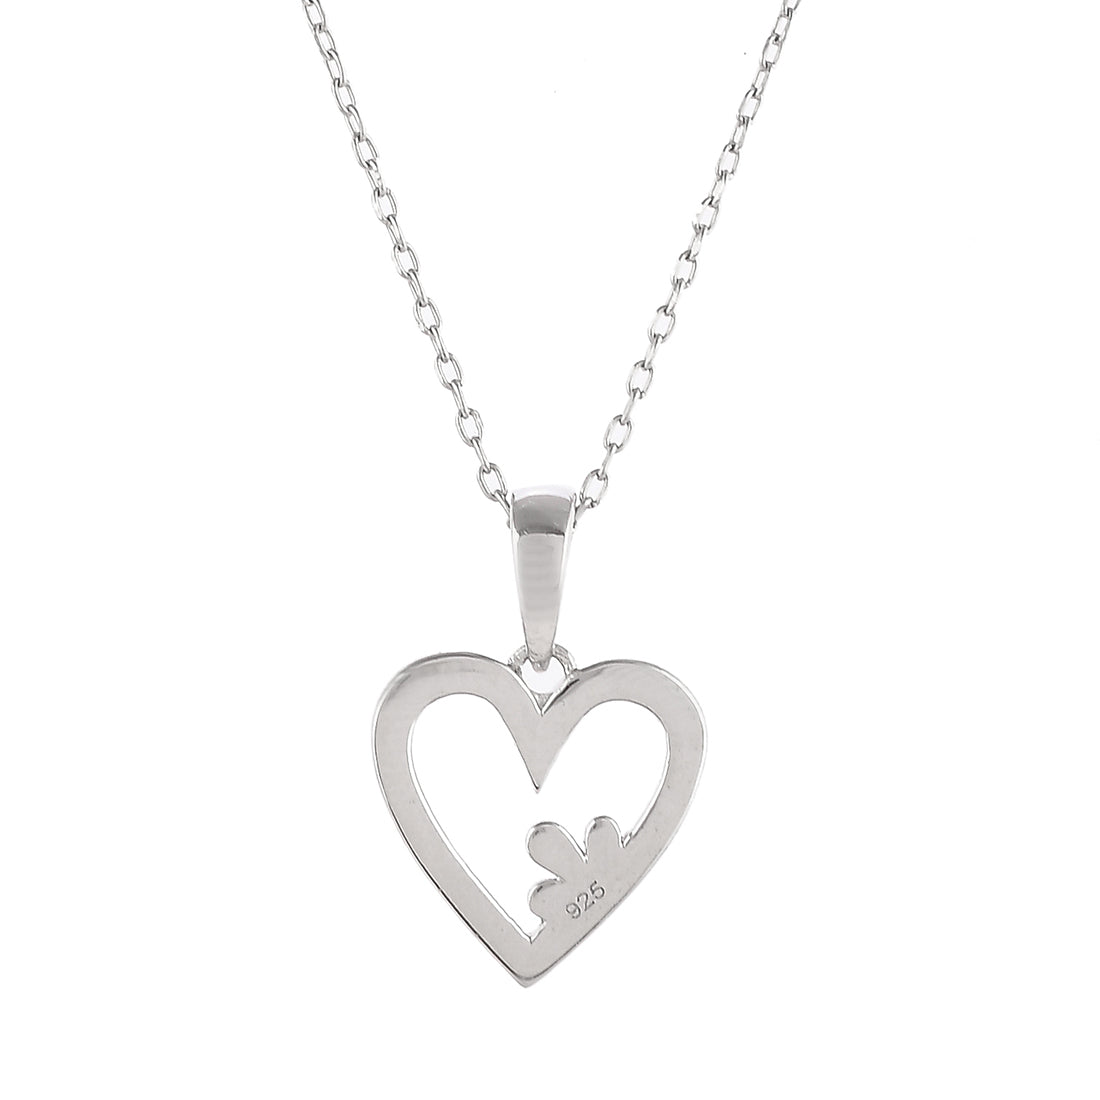 Green Clover Irish Love Heart Necklace - Vee's Gothic & Mystic Jewelry